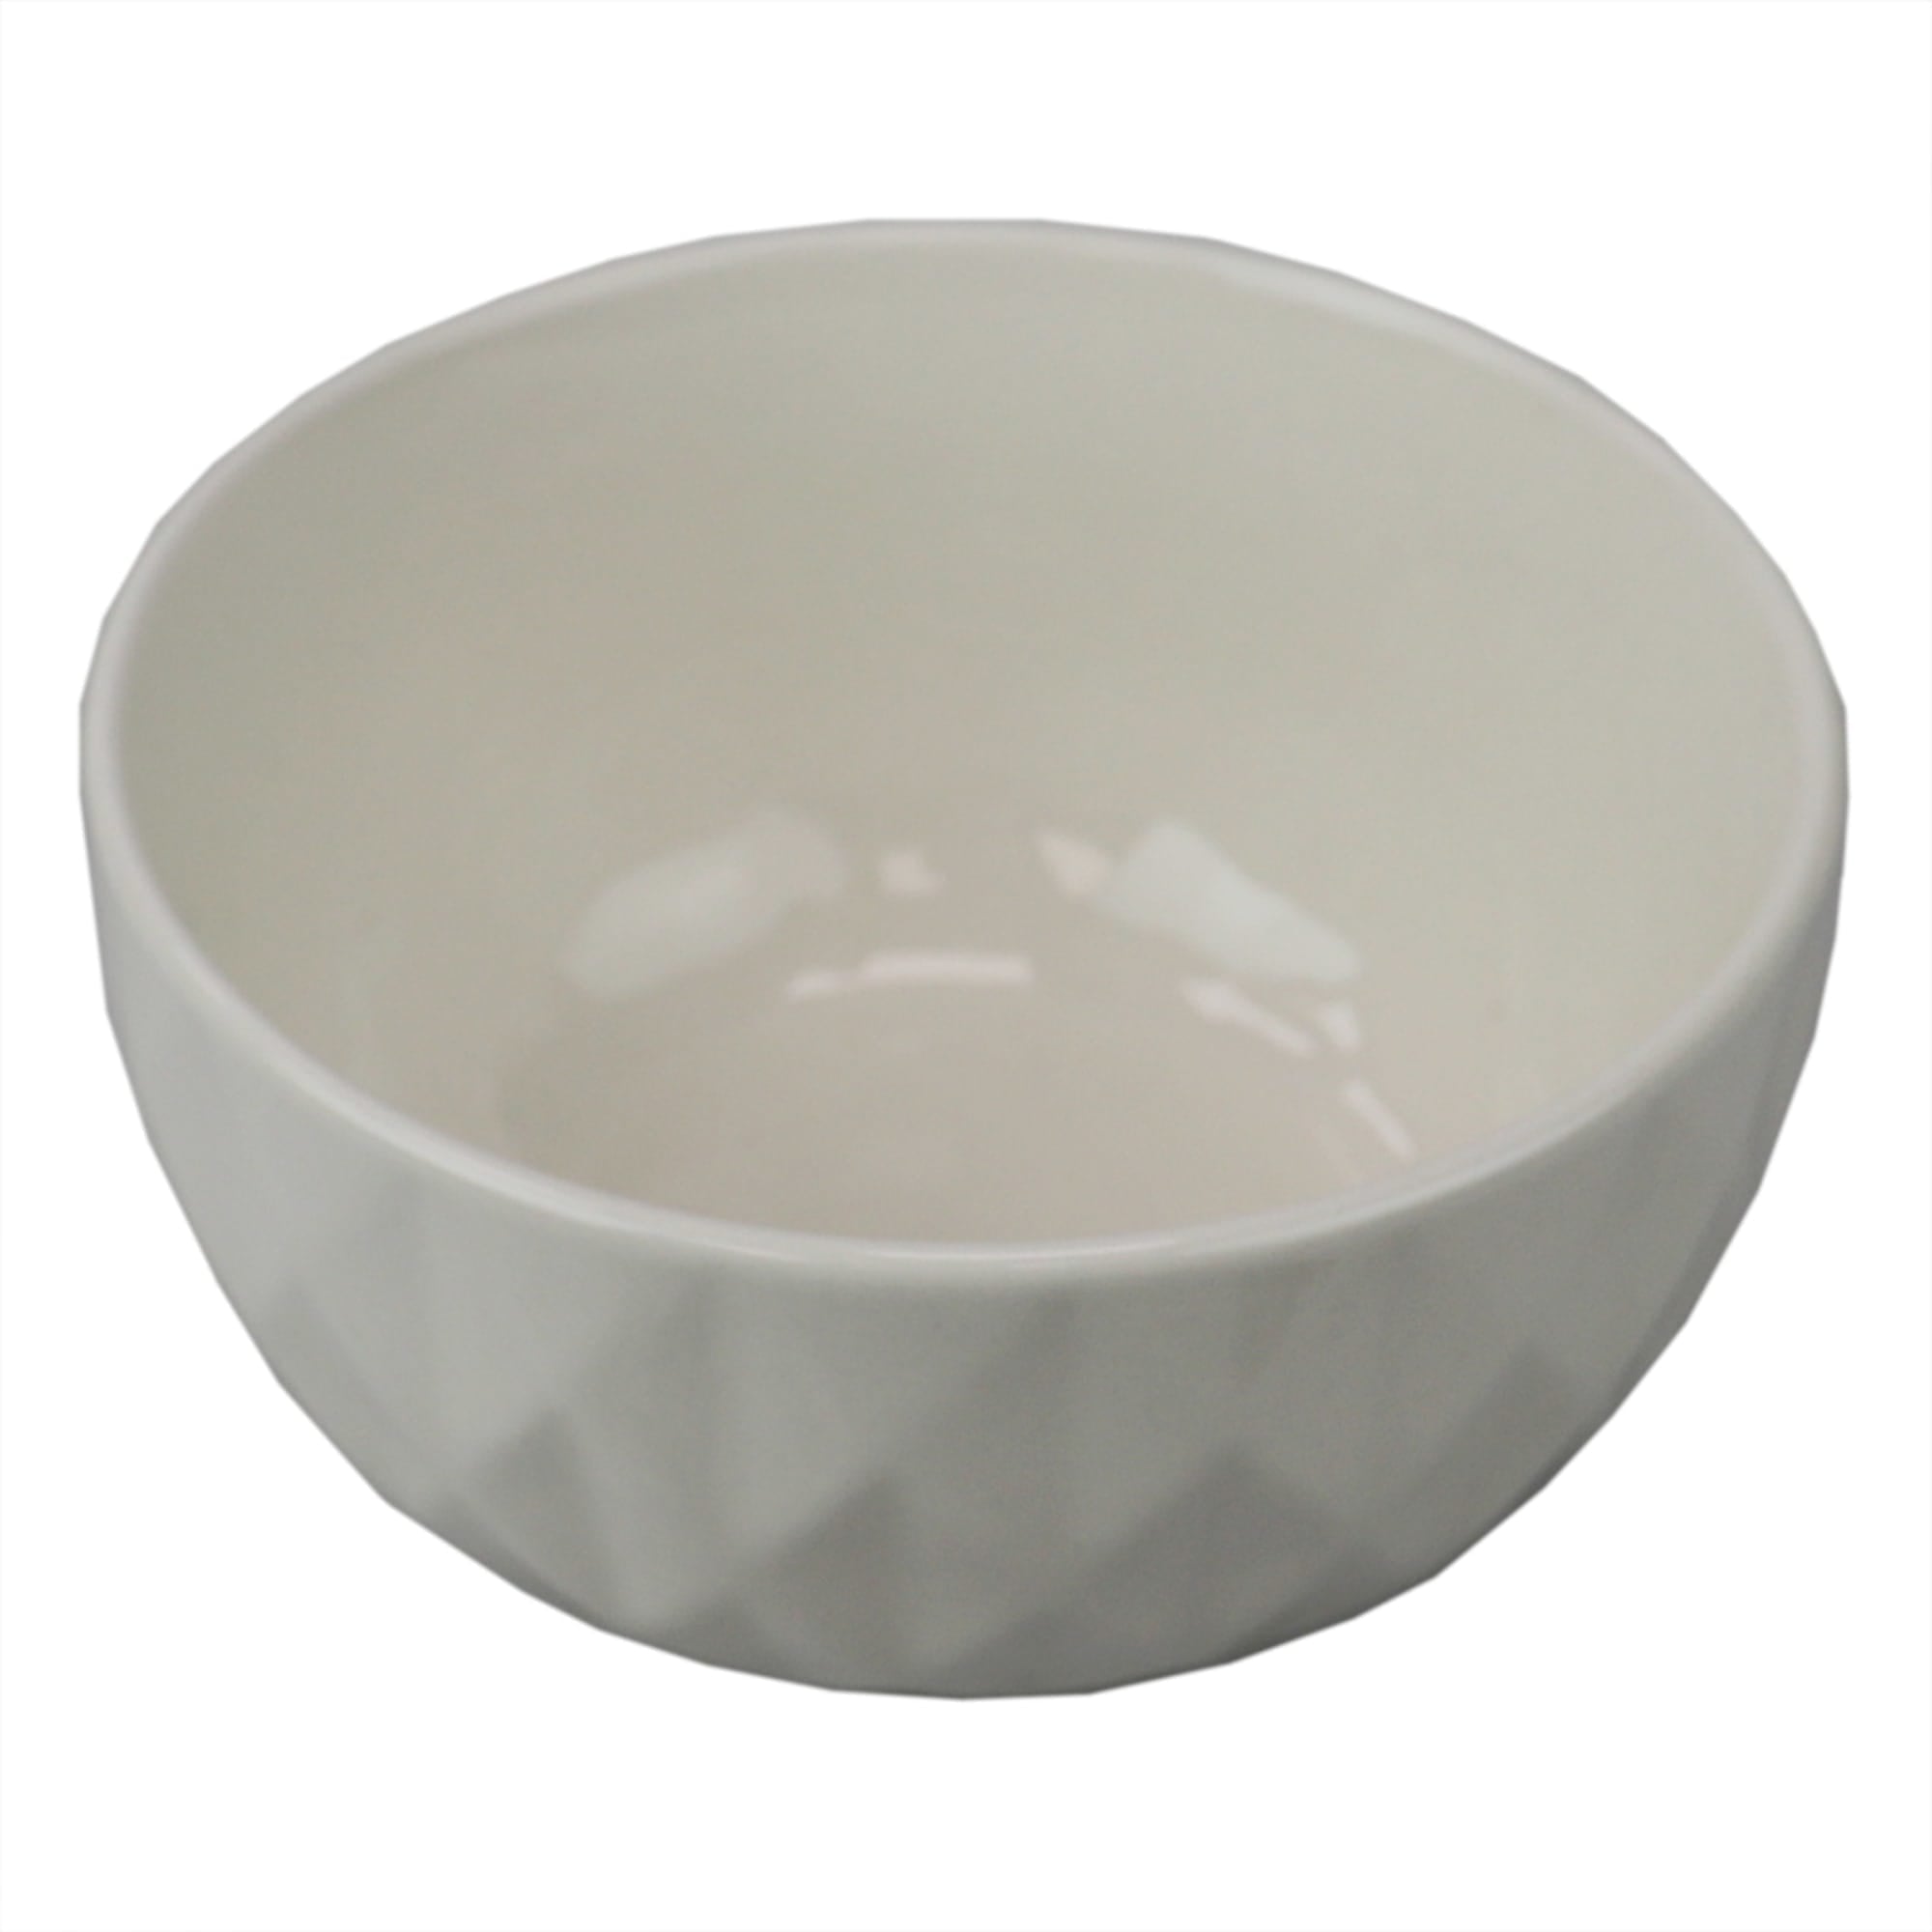 Home Basics Embossed Circle  7" Ceramic Bowl, White $2.00 EACH, CASE PACK OF 24